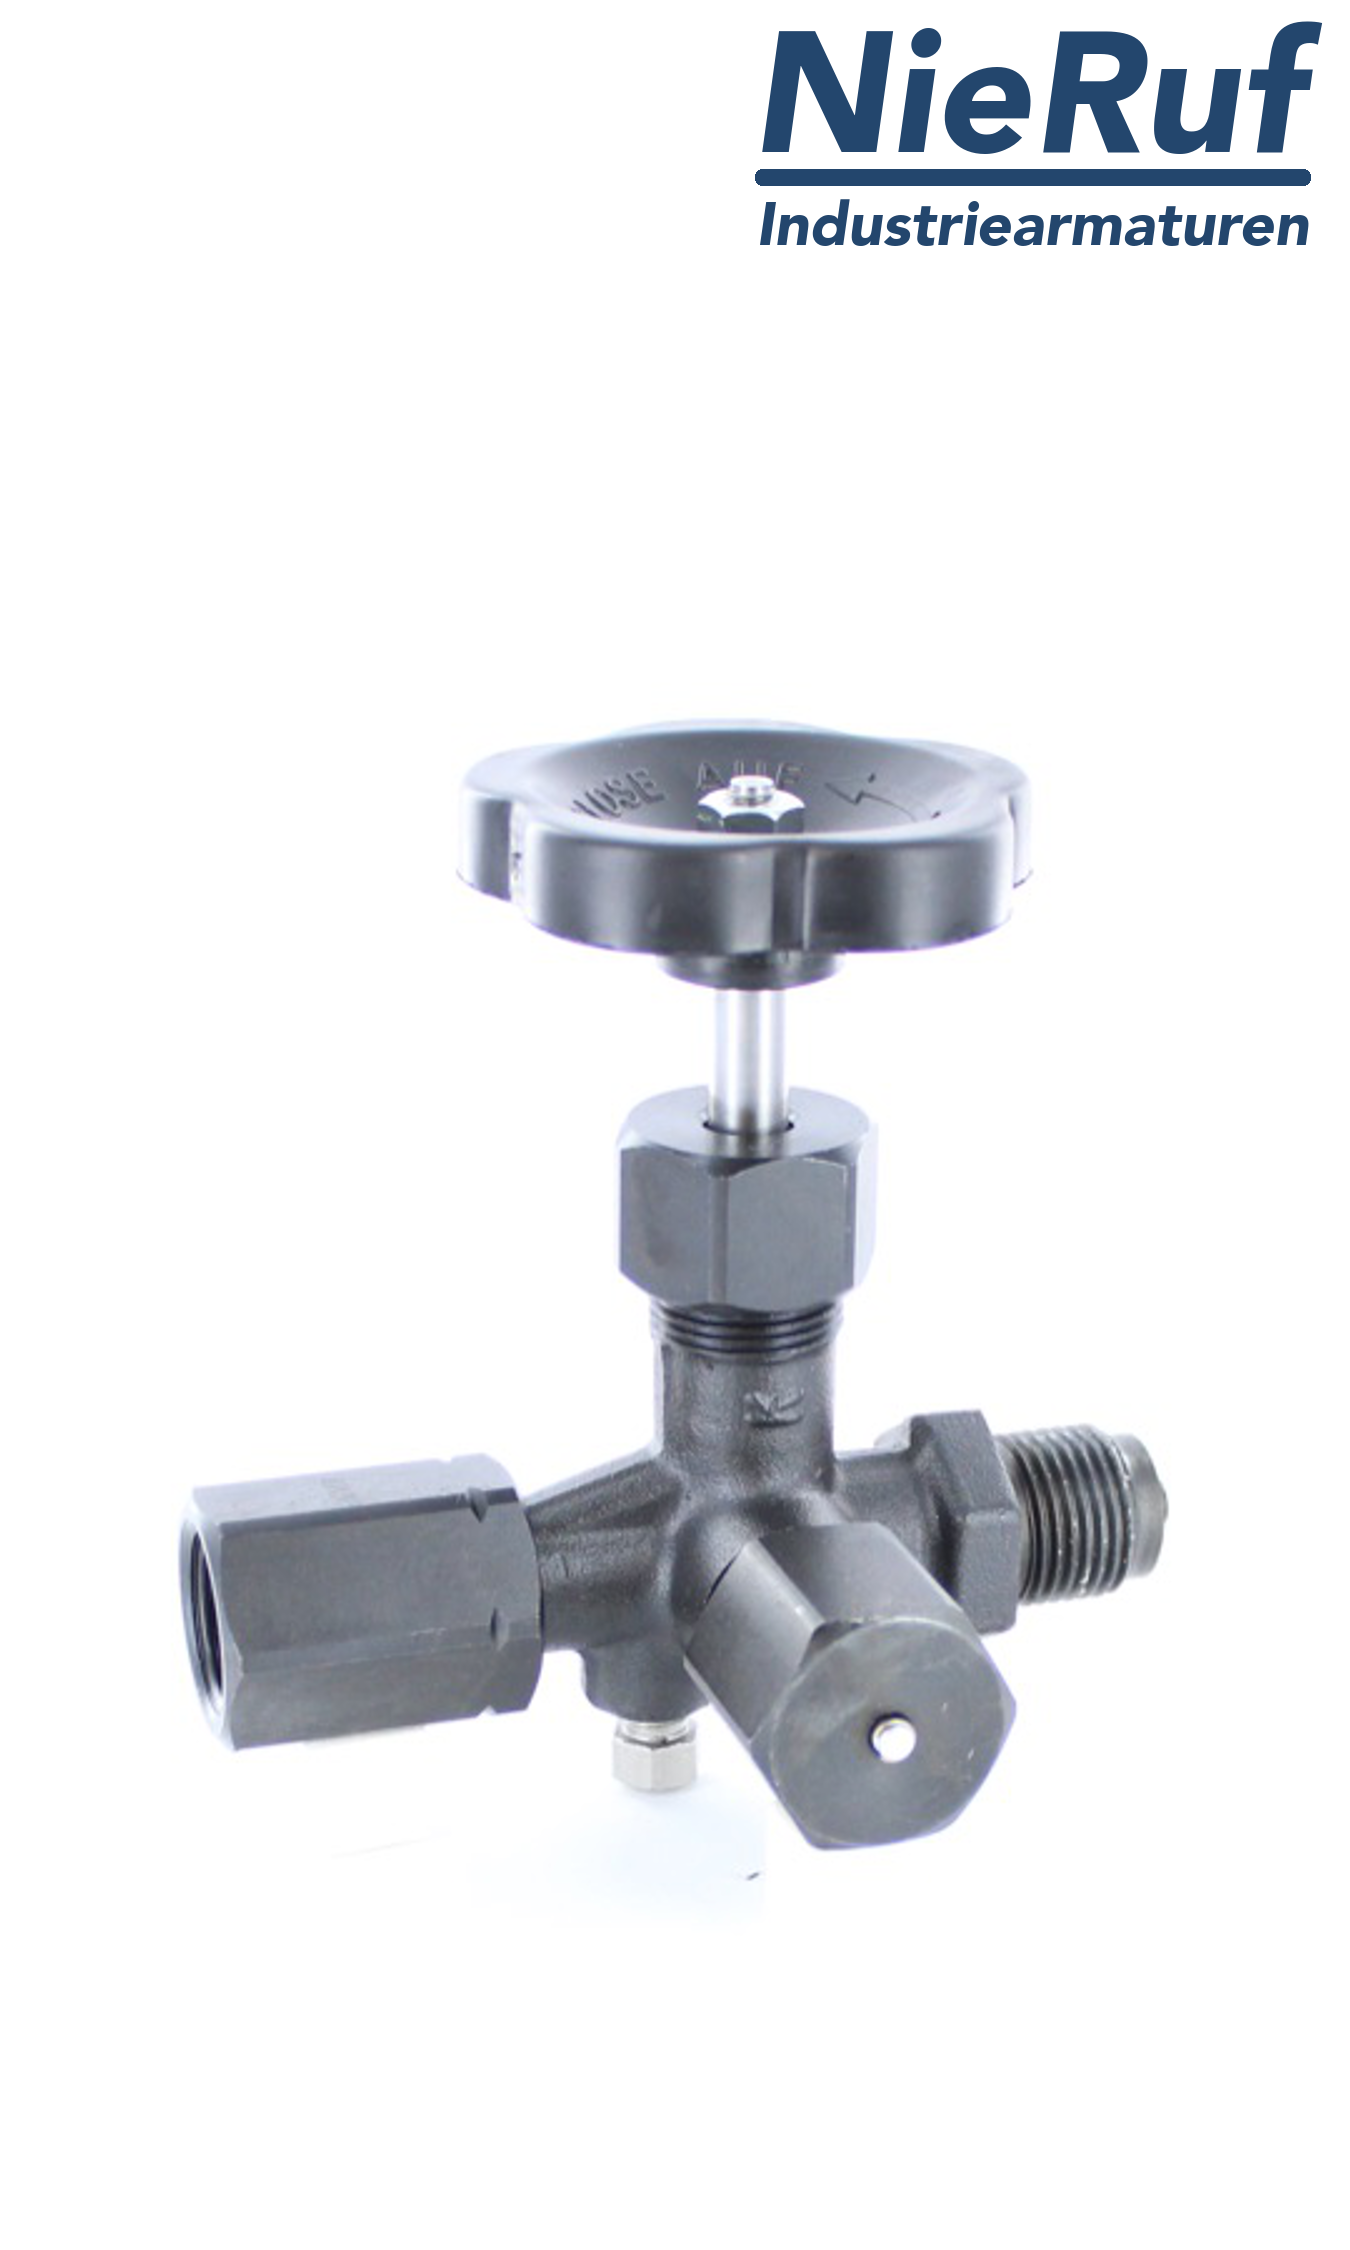 manometer gauge valves male thread x adapter for instrument holder with nut adjustable x test connector M20x1,5 DIN 16271 steel 1.0460 400 bar